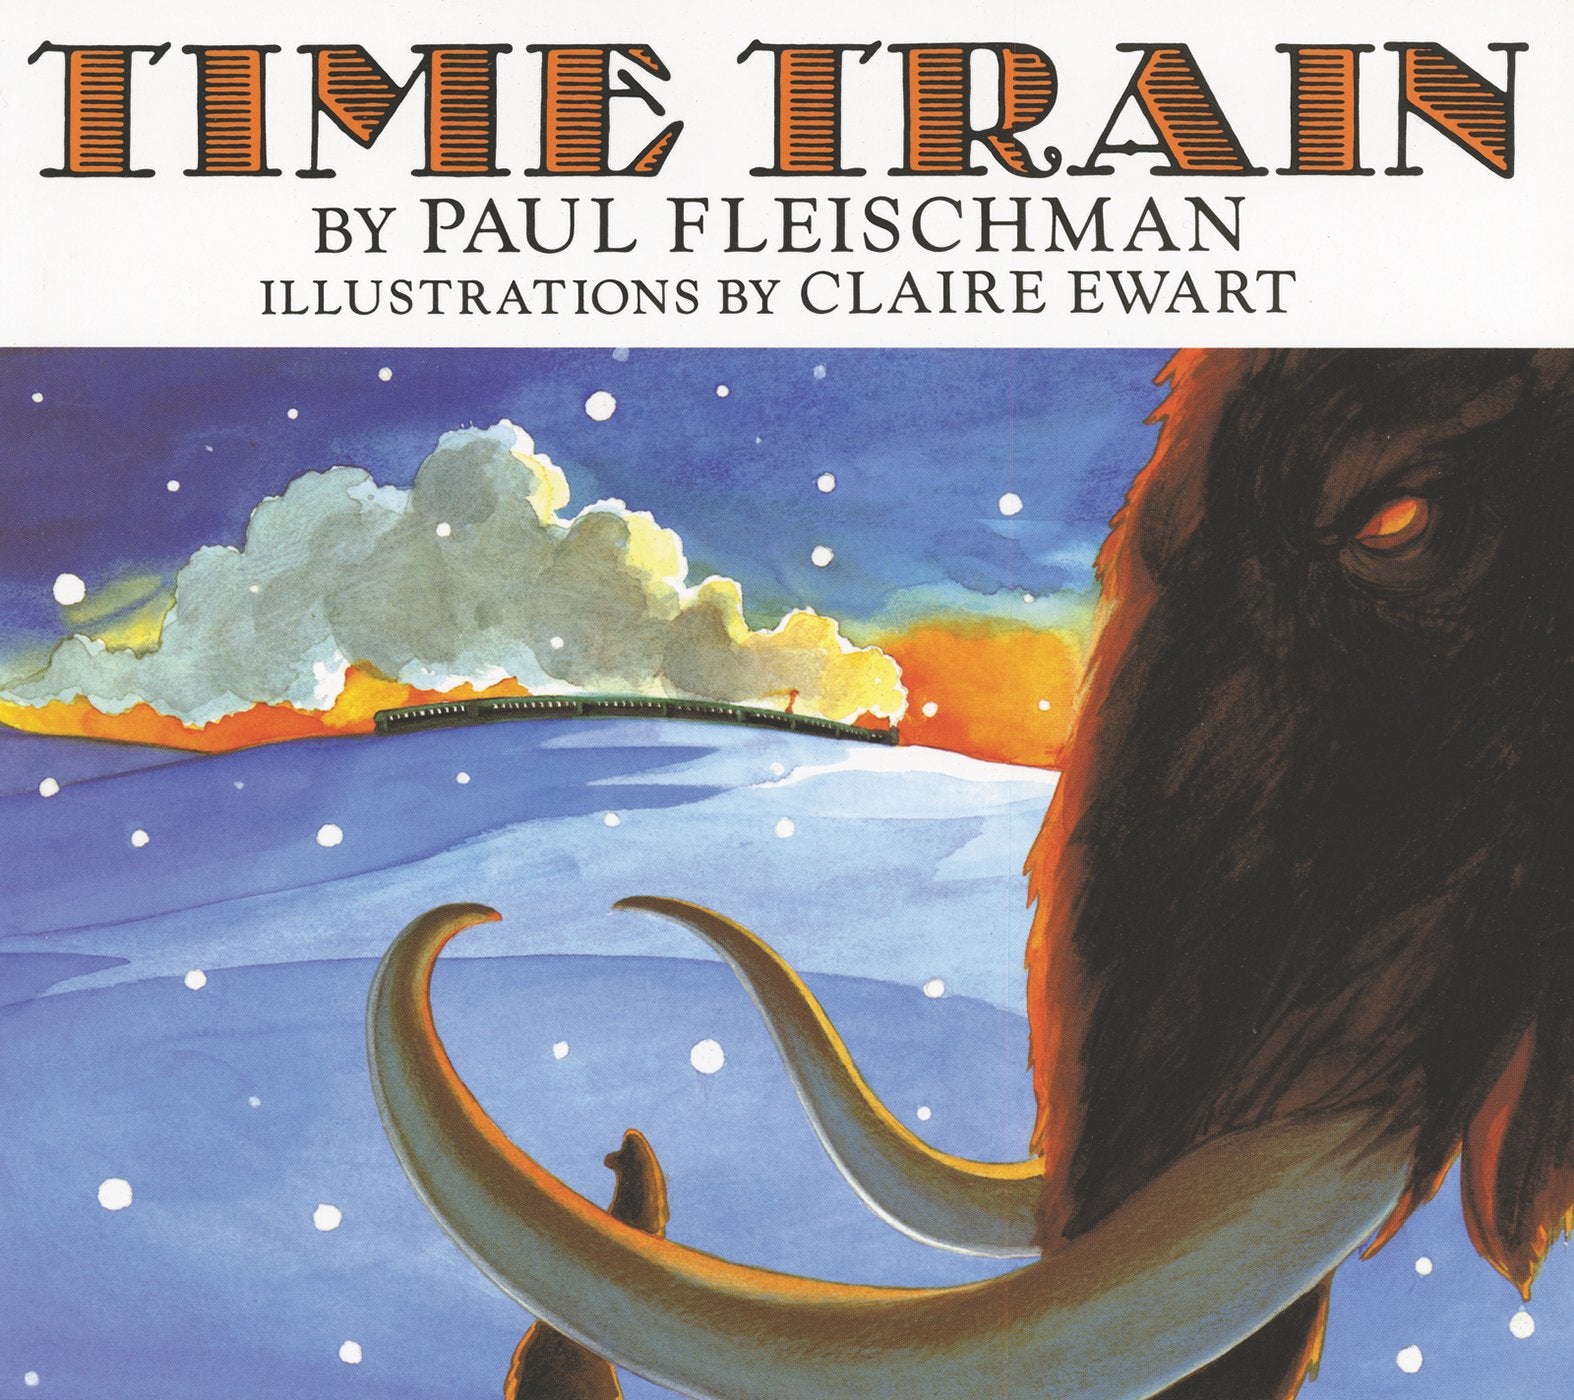 Time Train book